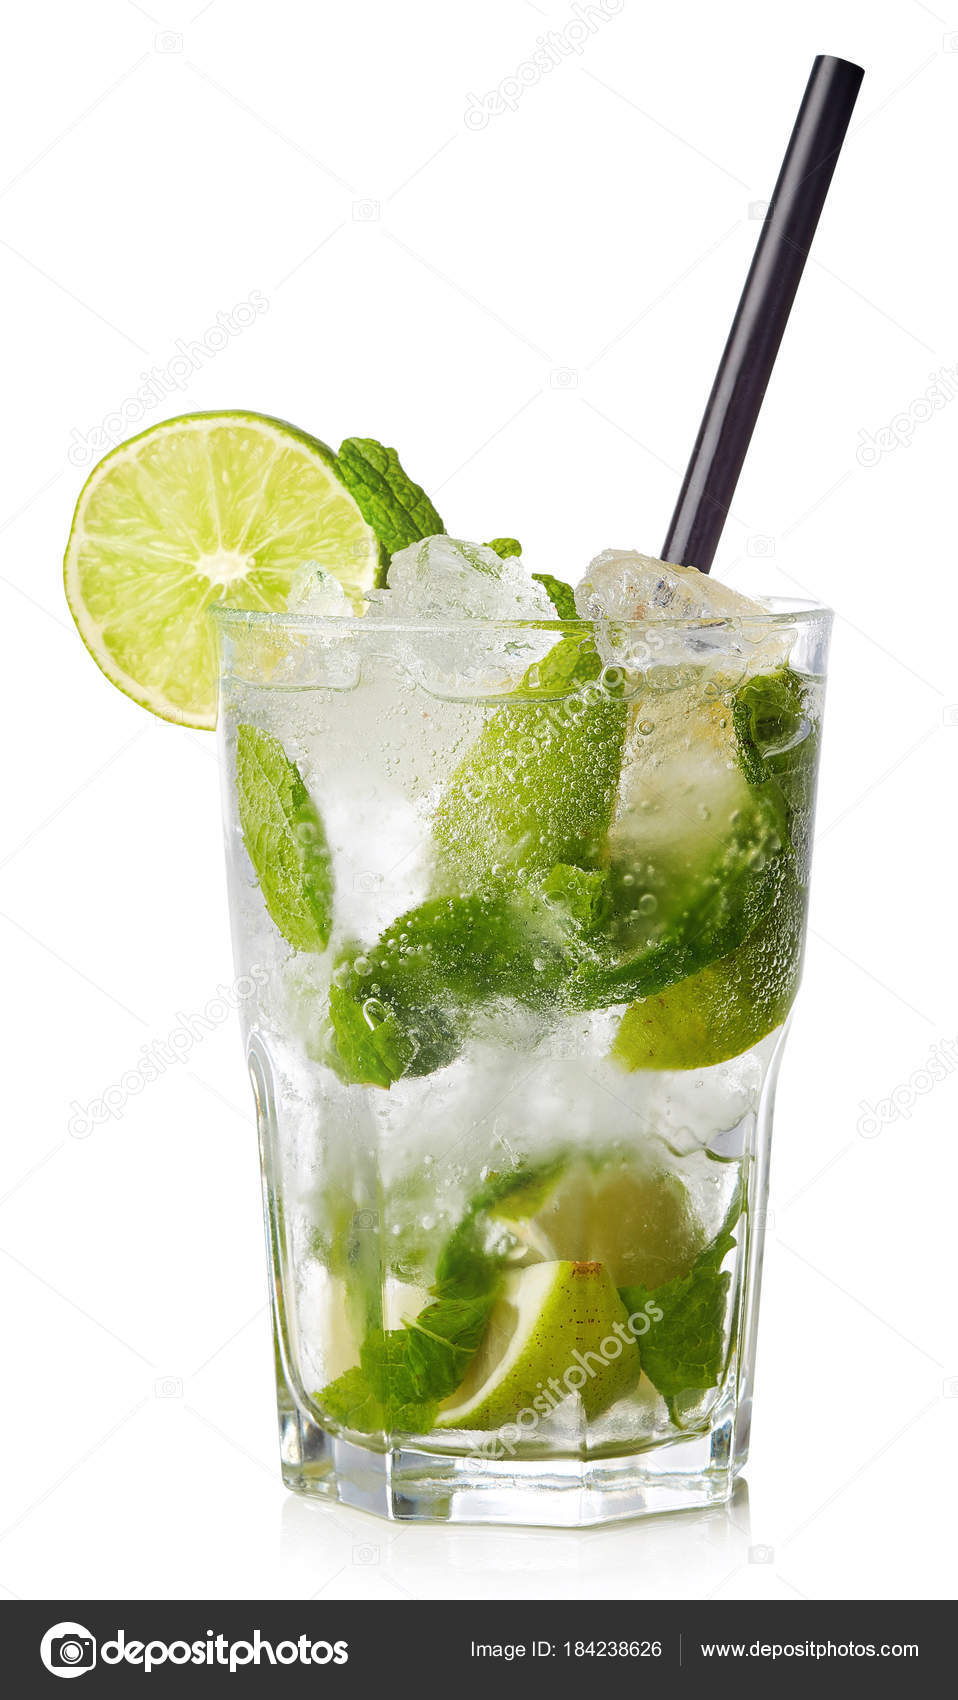 https://st3.depositphotos.com/1003272/18423/i/1600/depositphotos_184238626-stock-photo-glass-of-mojito-cocktail.jpg